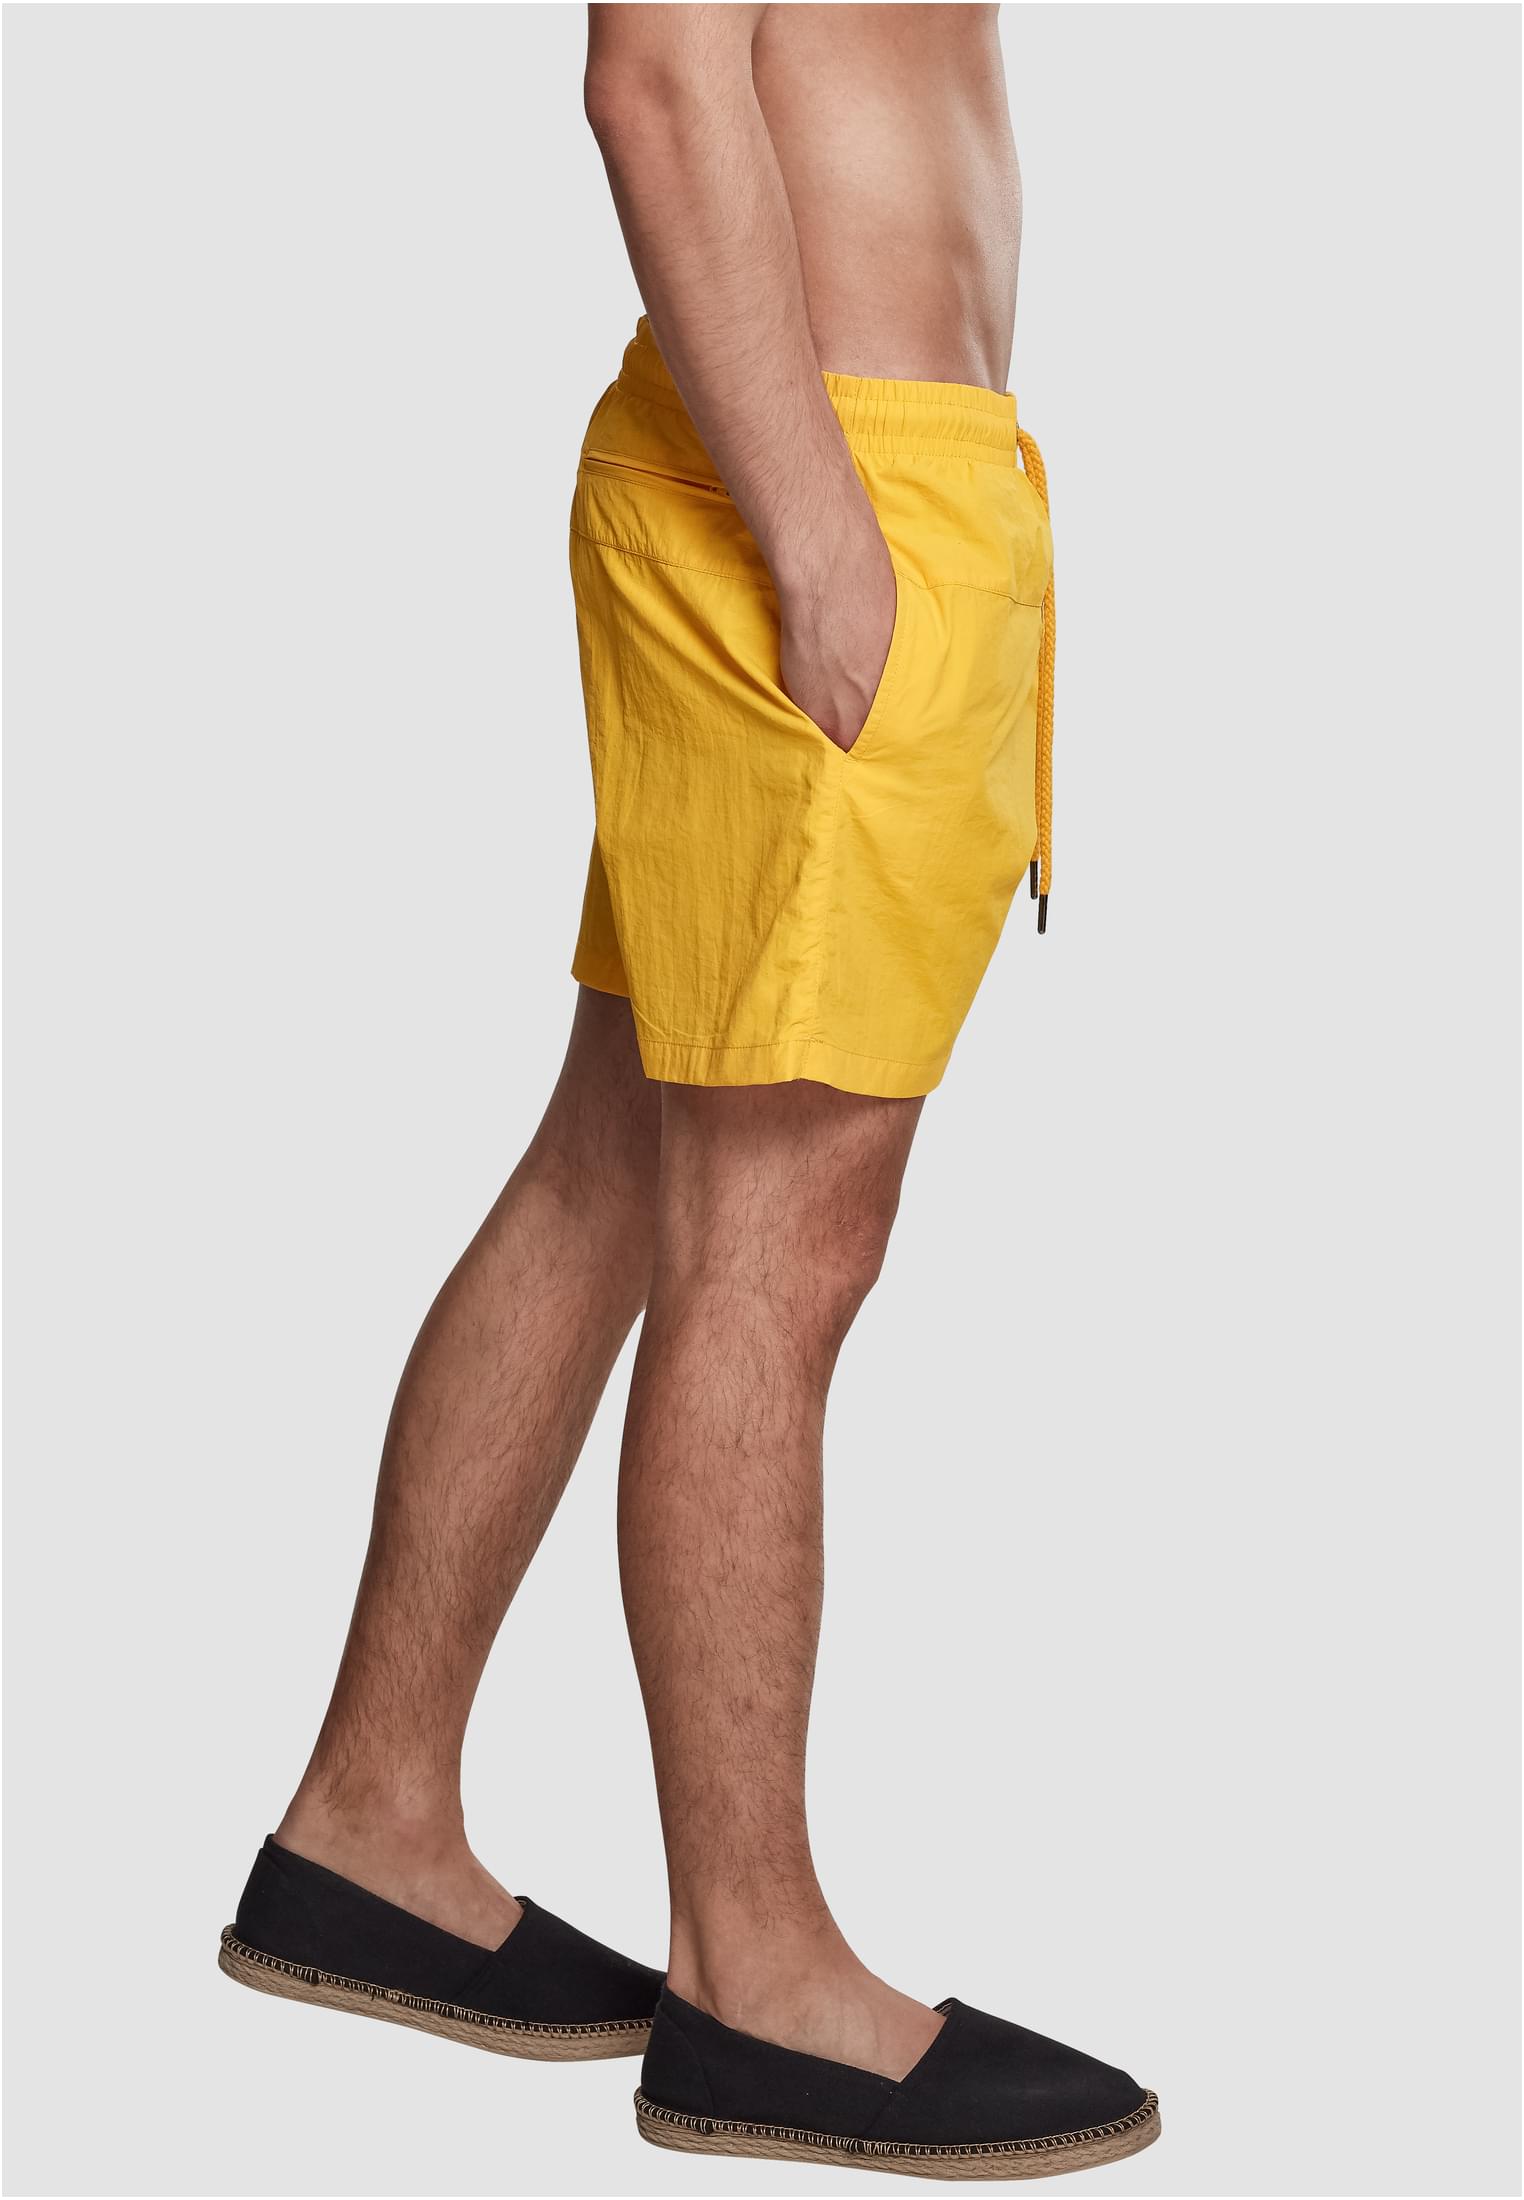 Plus Size Block Swim Shorts in Farbe chrome yellow